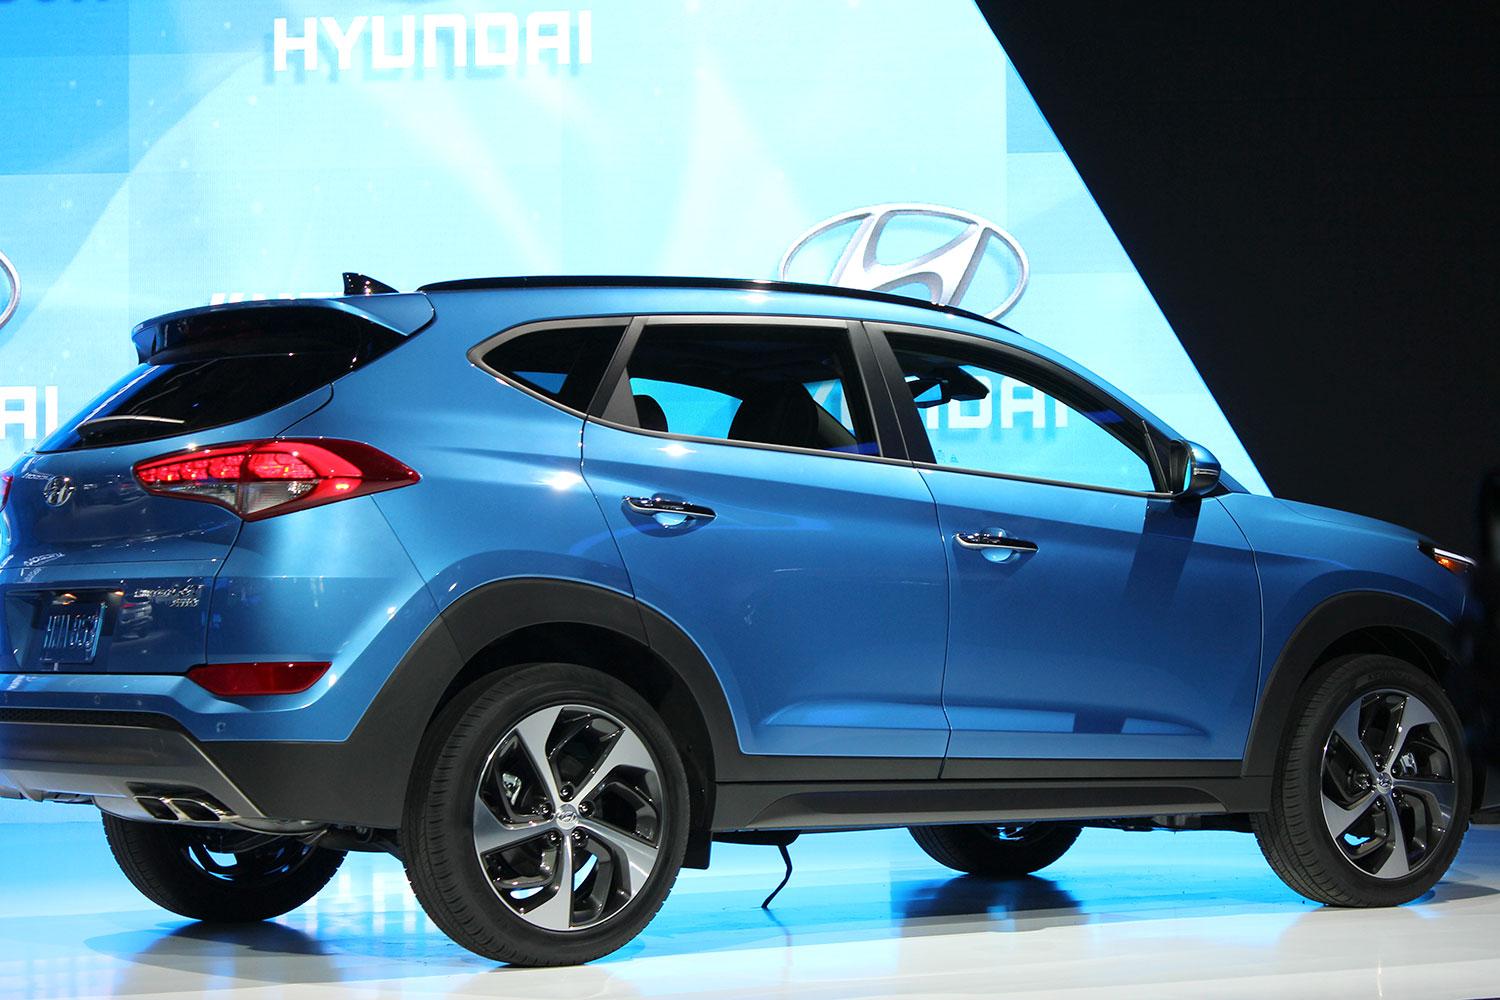 2016 Hyundai Tuscon side